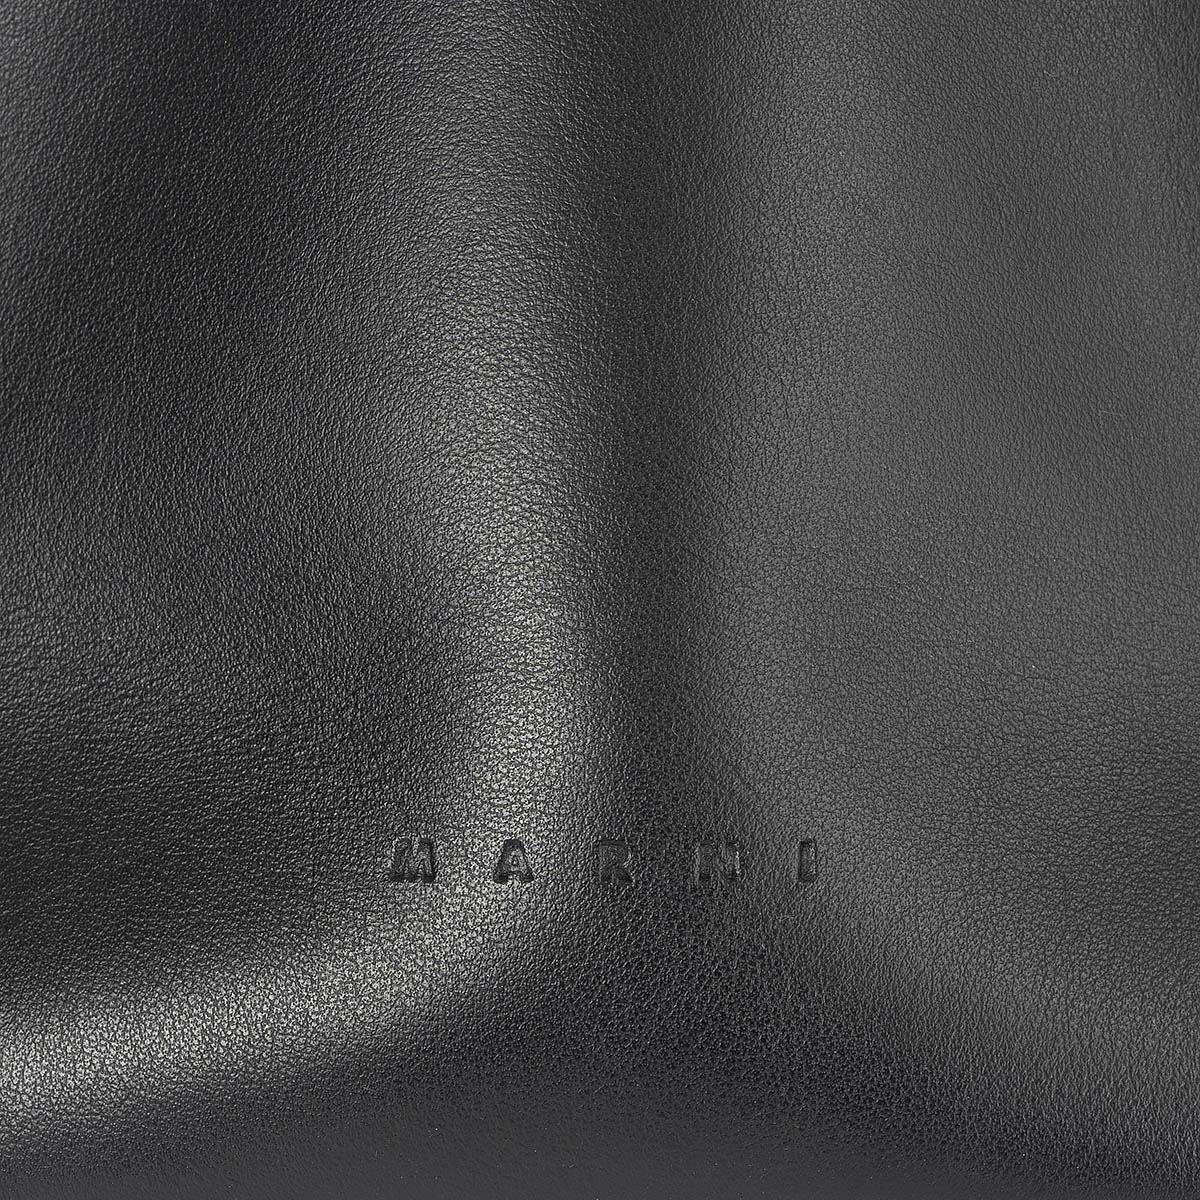 MARNI black leather POUCH KISSLOCK Clutch Bag For Sale 2